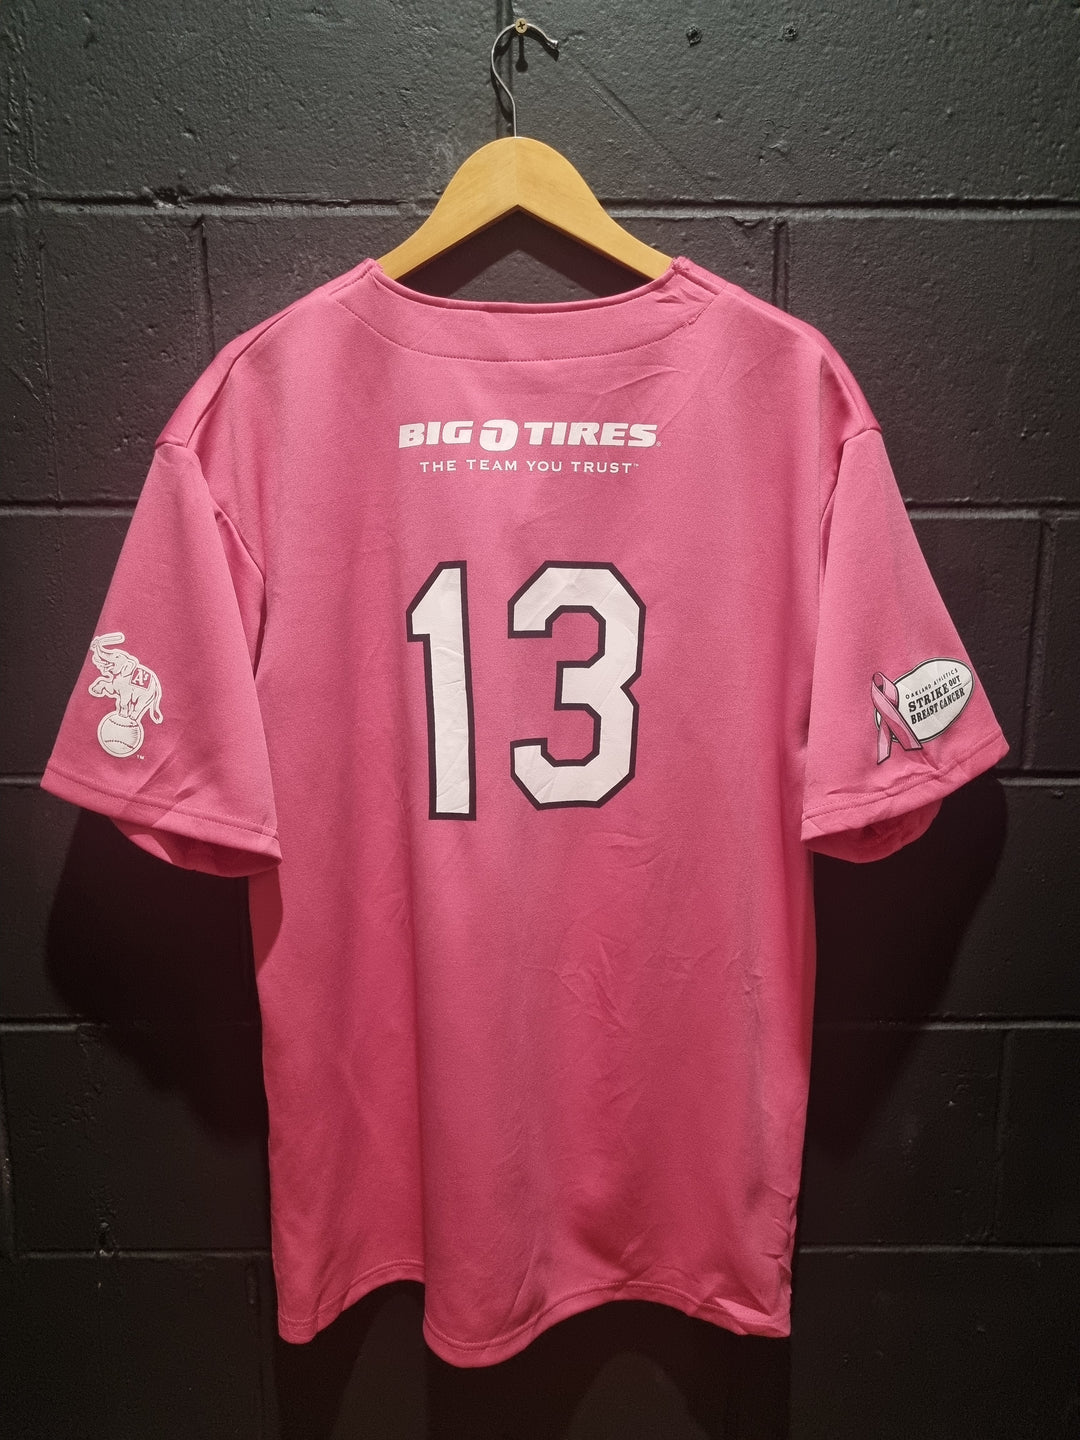 Oakland Athletics Breast Cancer Awareness XL